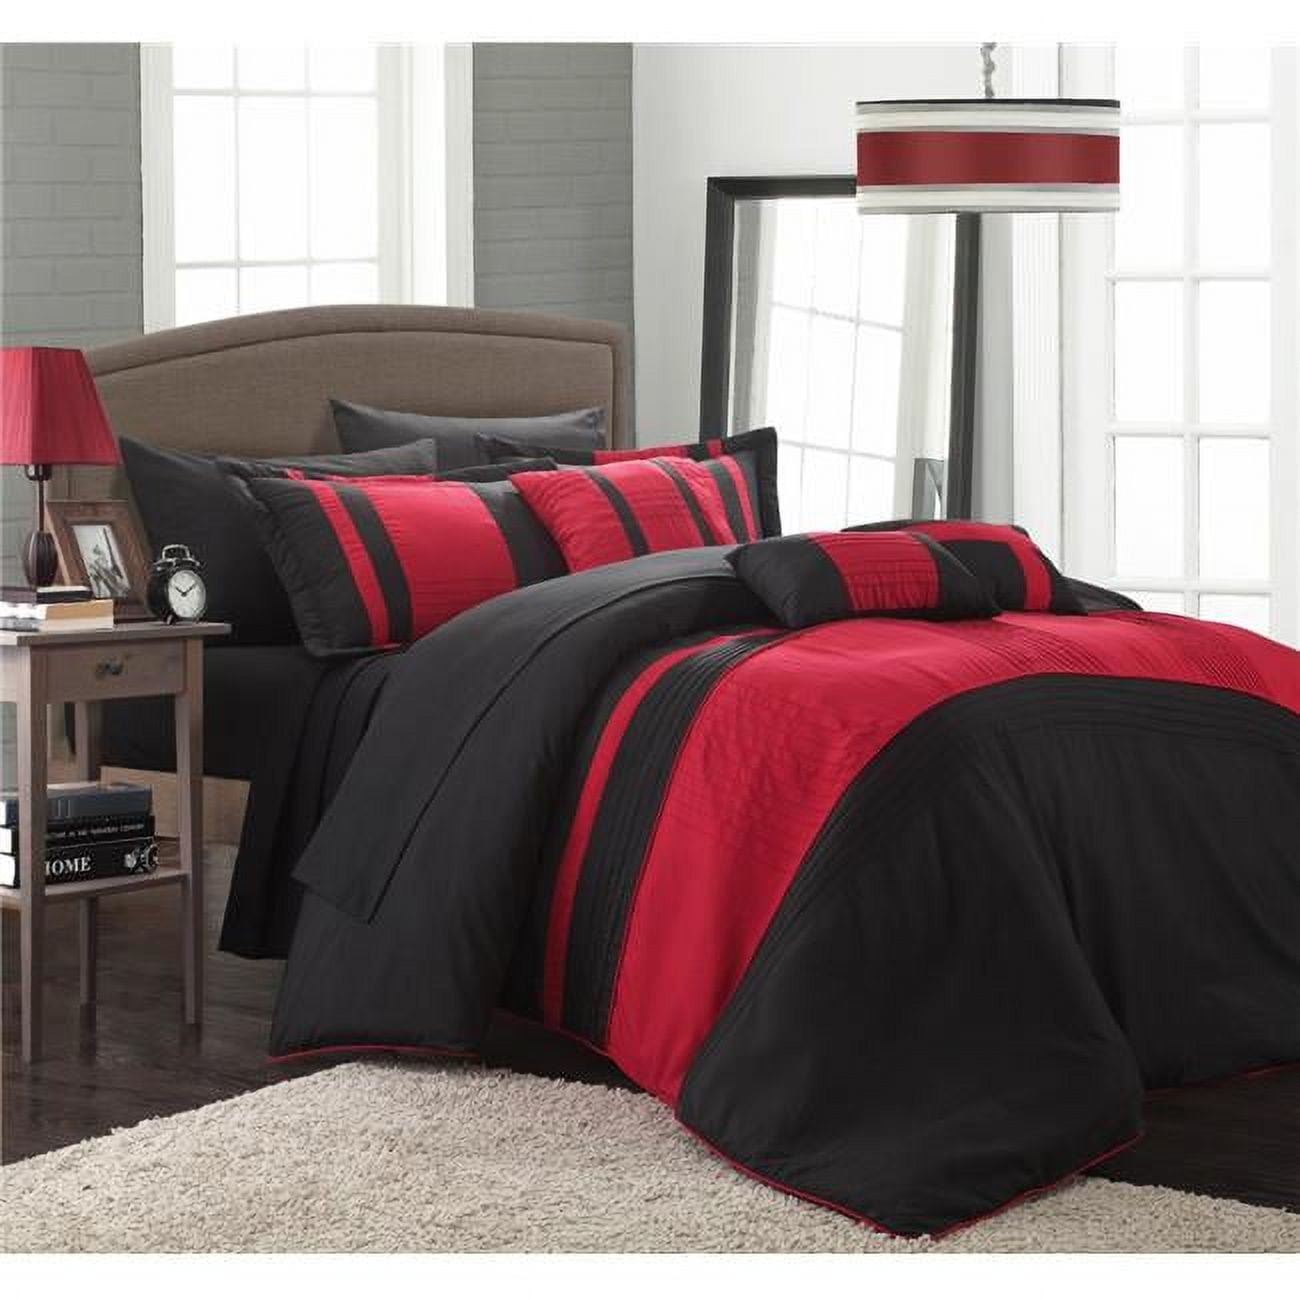 Siesta Color Block Comforter Set With Sheets - Red - Queen - 10 Piece